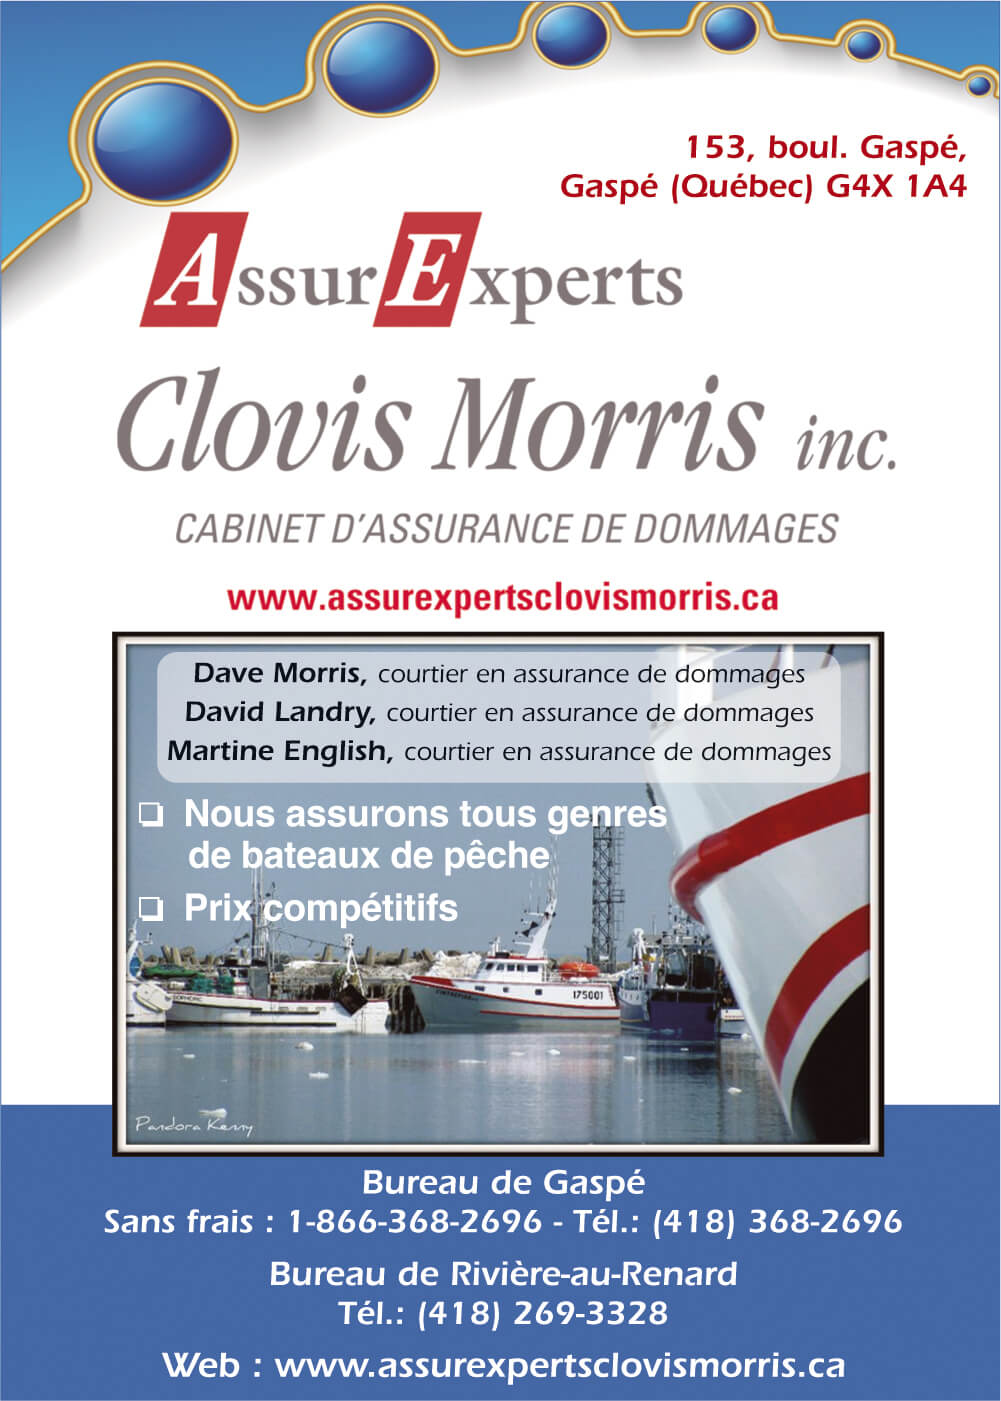 AssurExperts Clovis Morris inc.